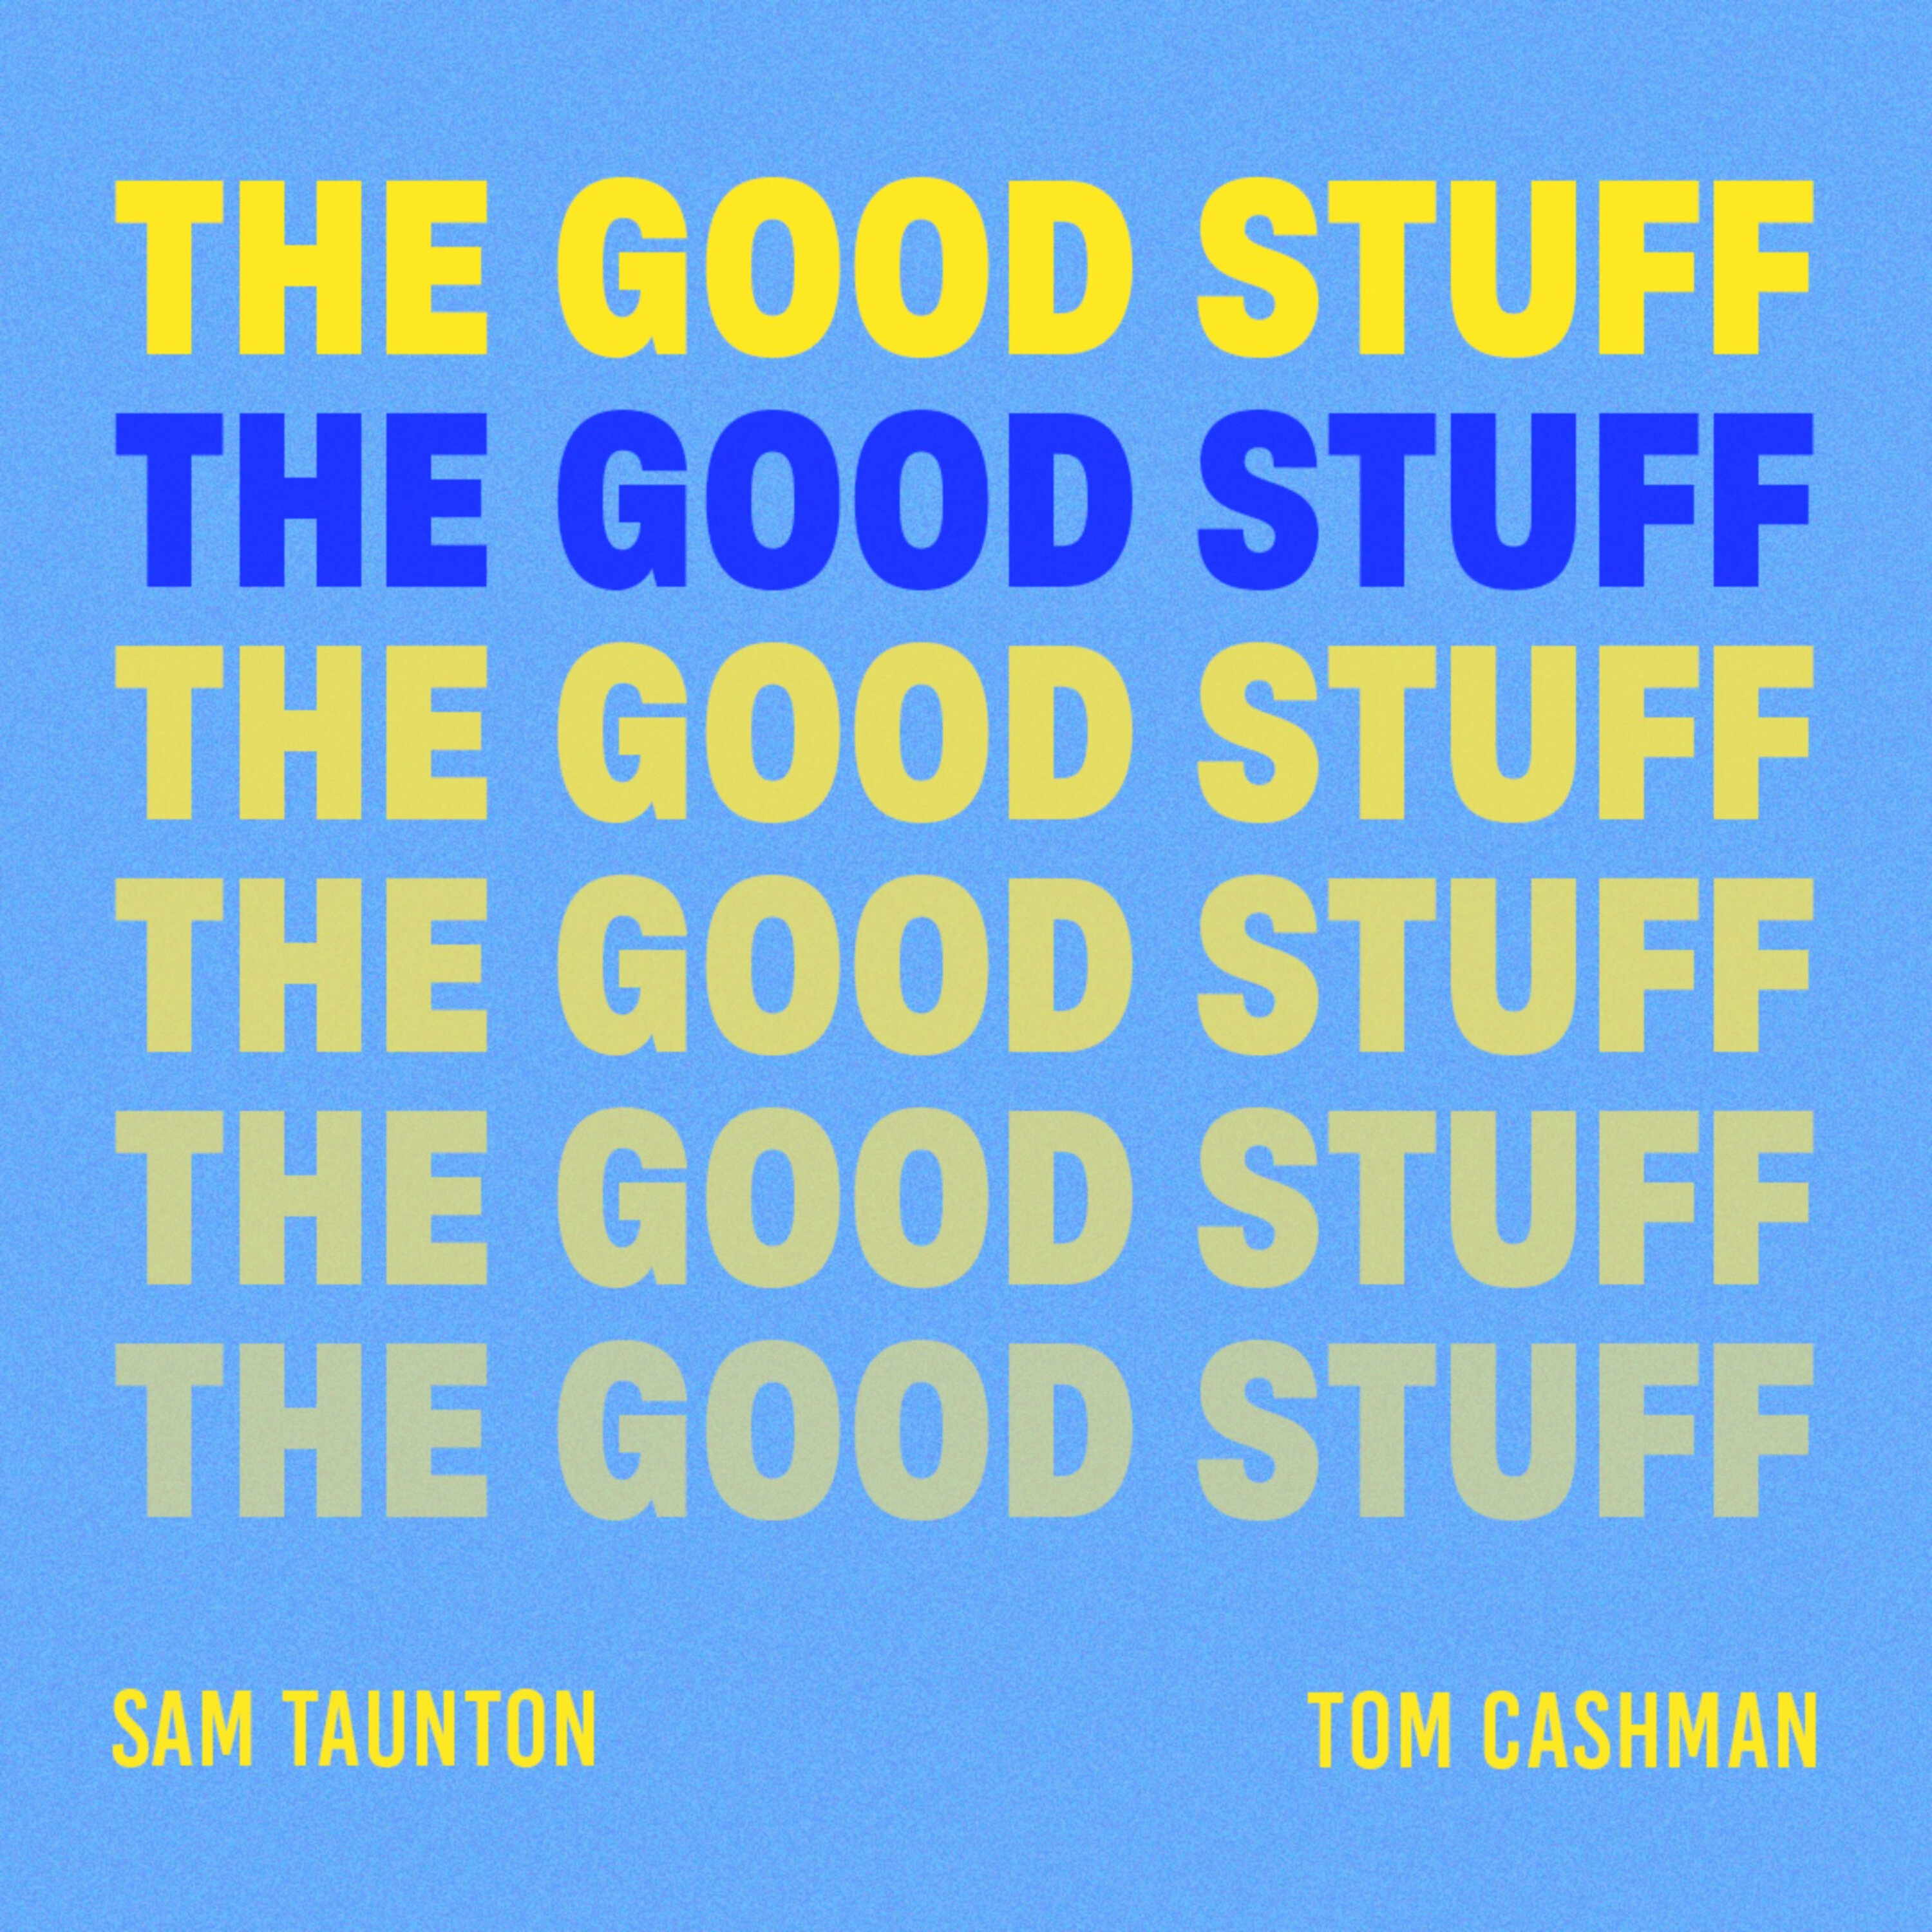 The Good Stuff - Episode 36 Feat. Cameron James